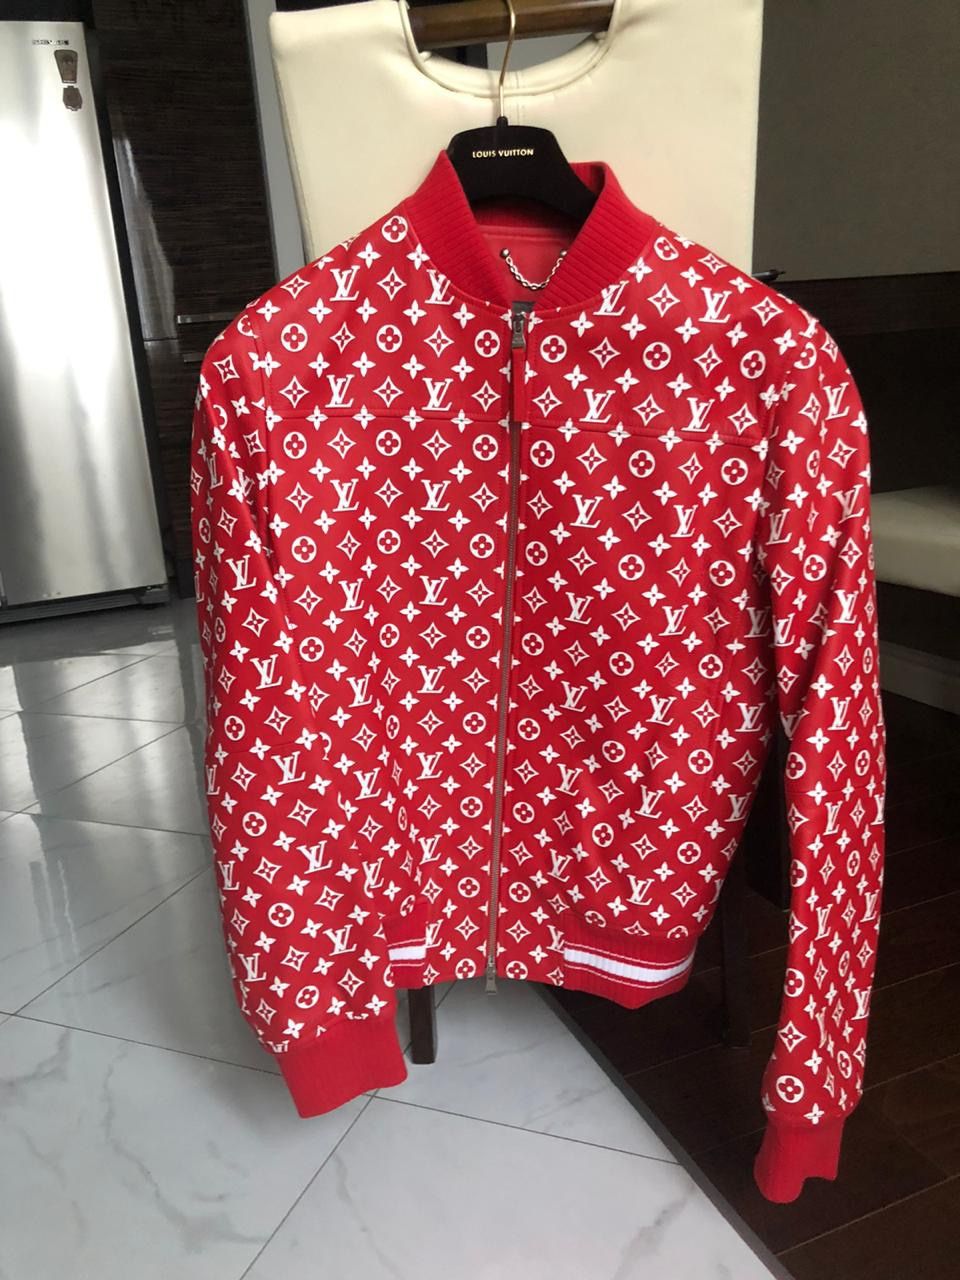 Red supreme/Louis Vuitton jacket  Louis vuitton supreme, Louis